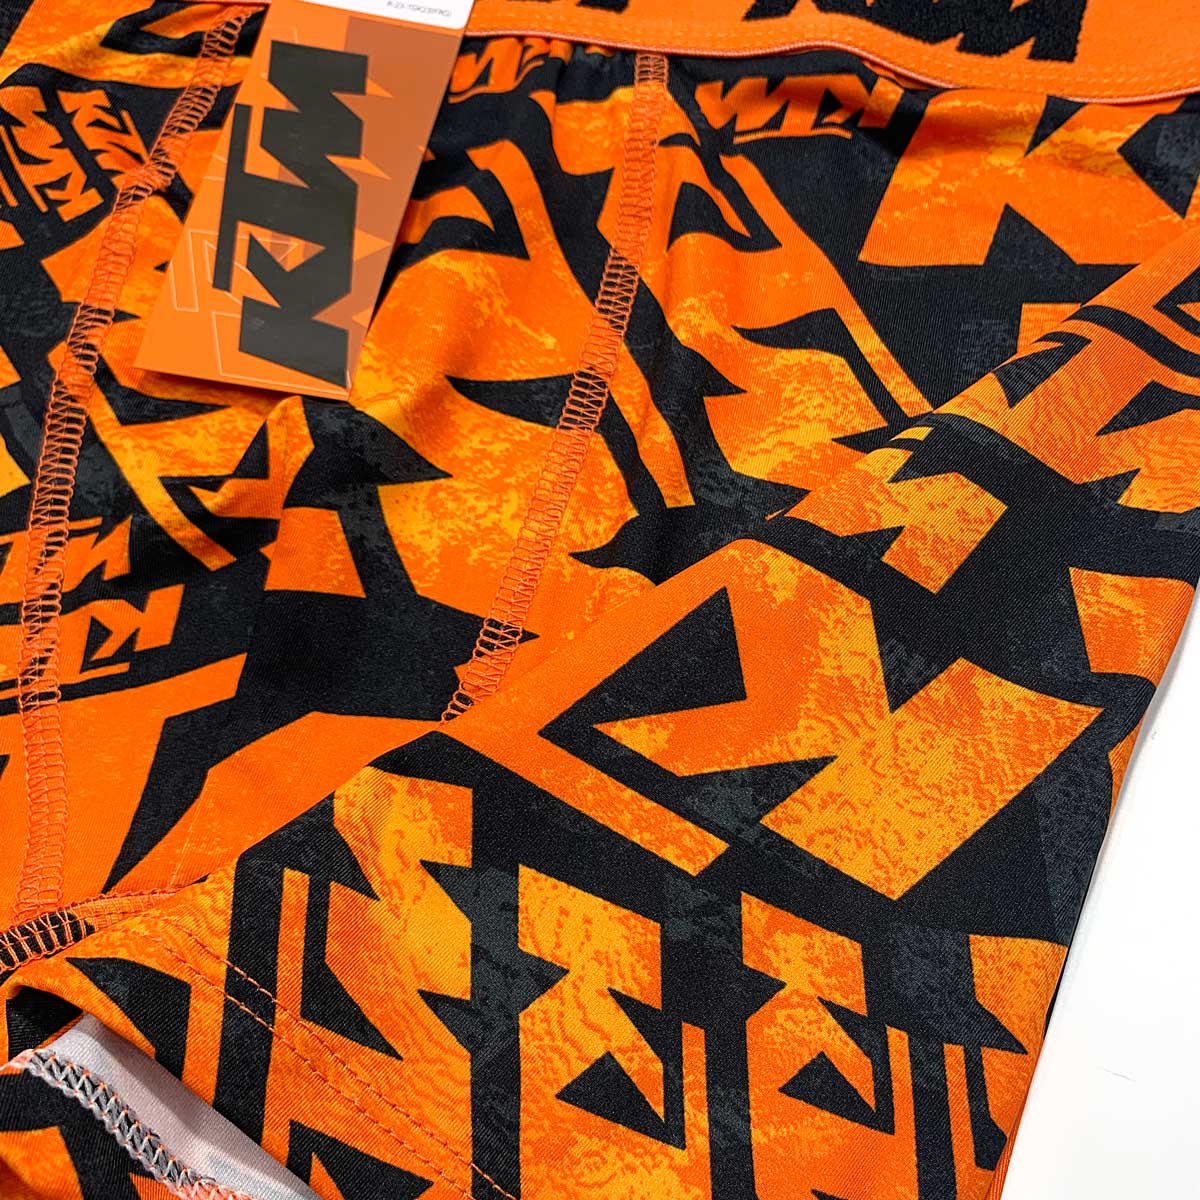 FREEGUN BOXERPANTS Freegun Boxer Shorts Men's KTM Series Underwear Trunks